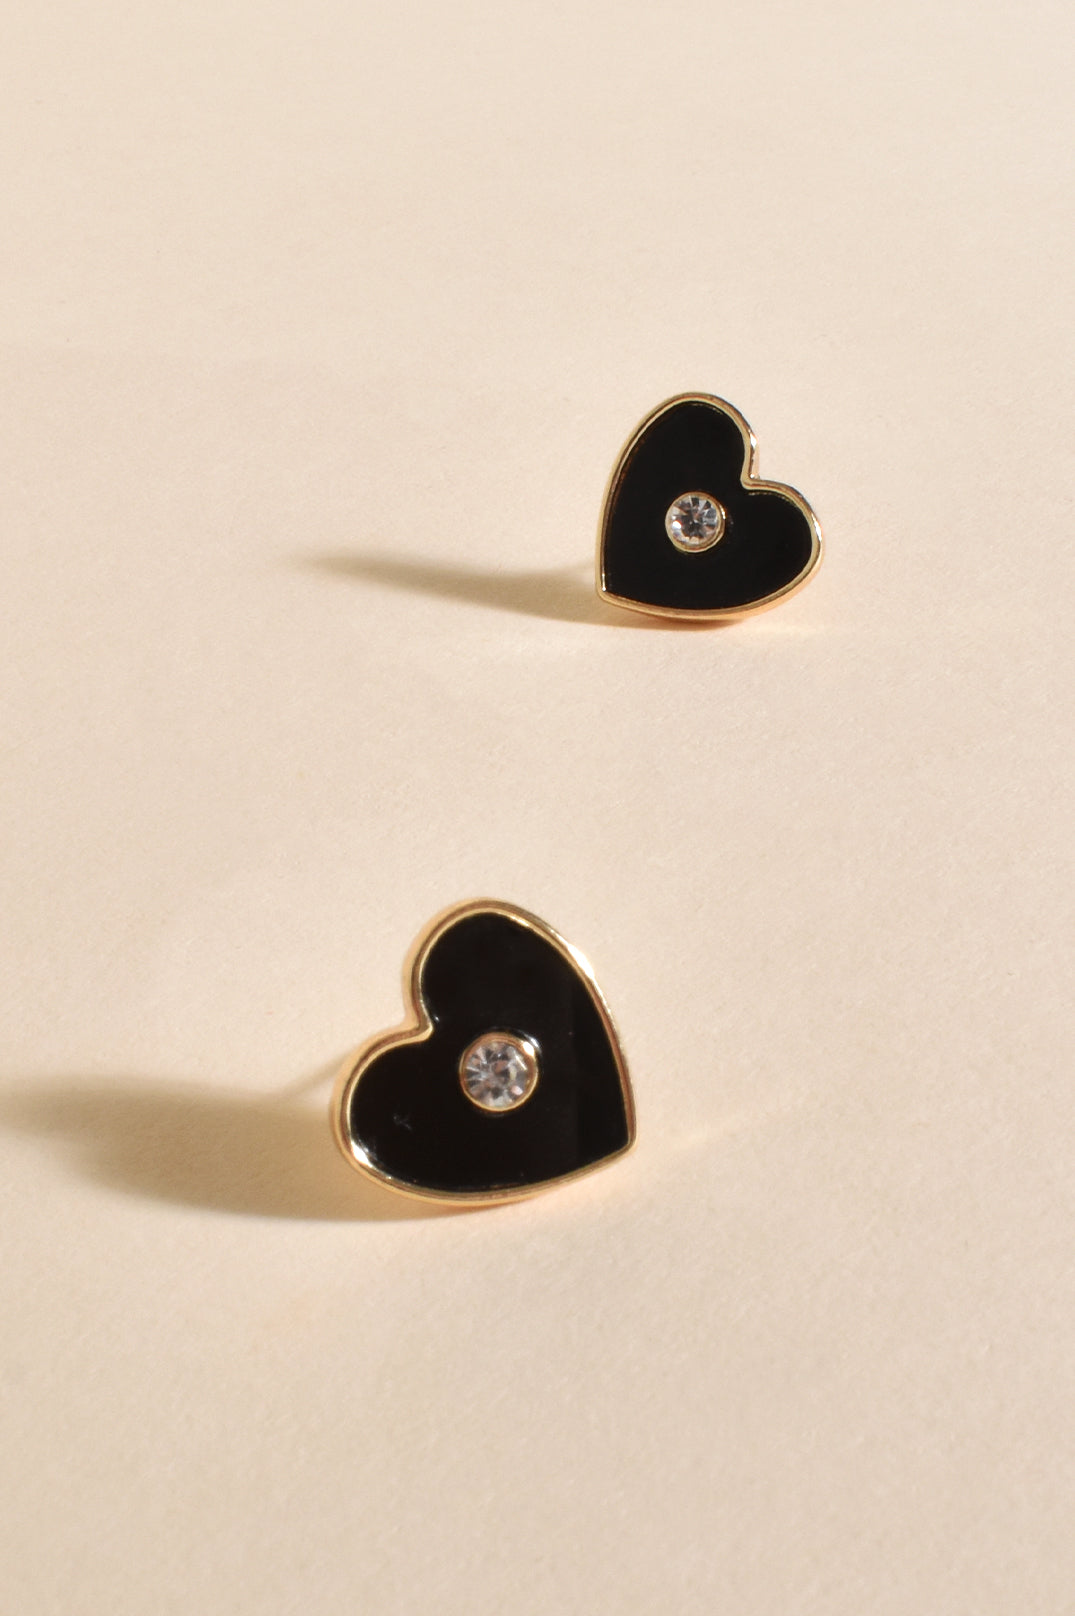 Gold and Black Enamel Heart Stud Fashion Earrings